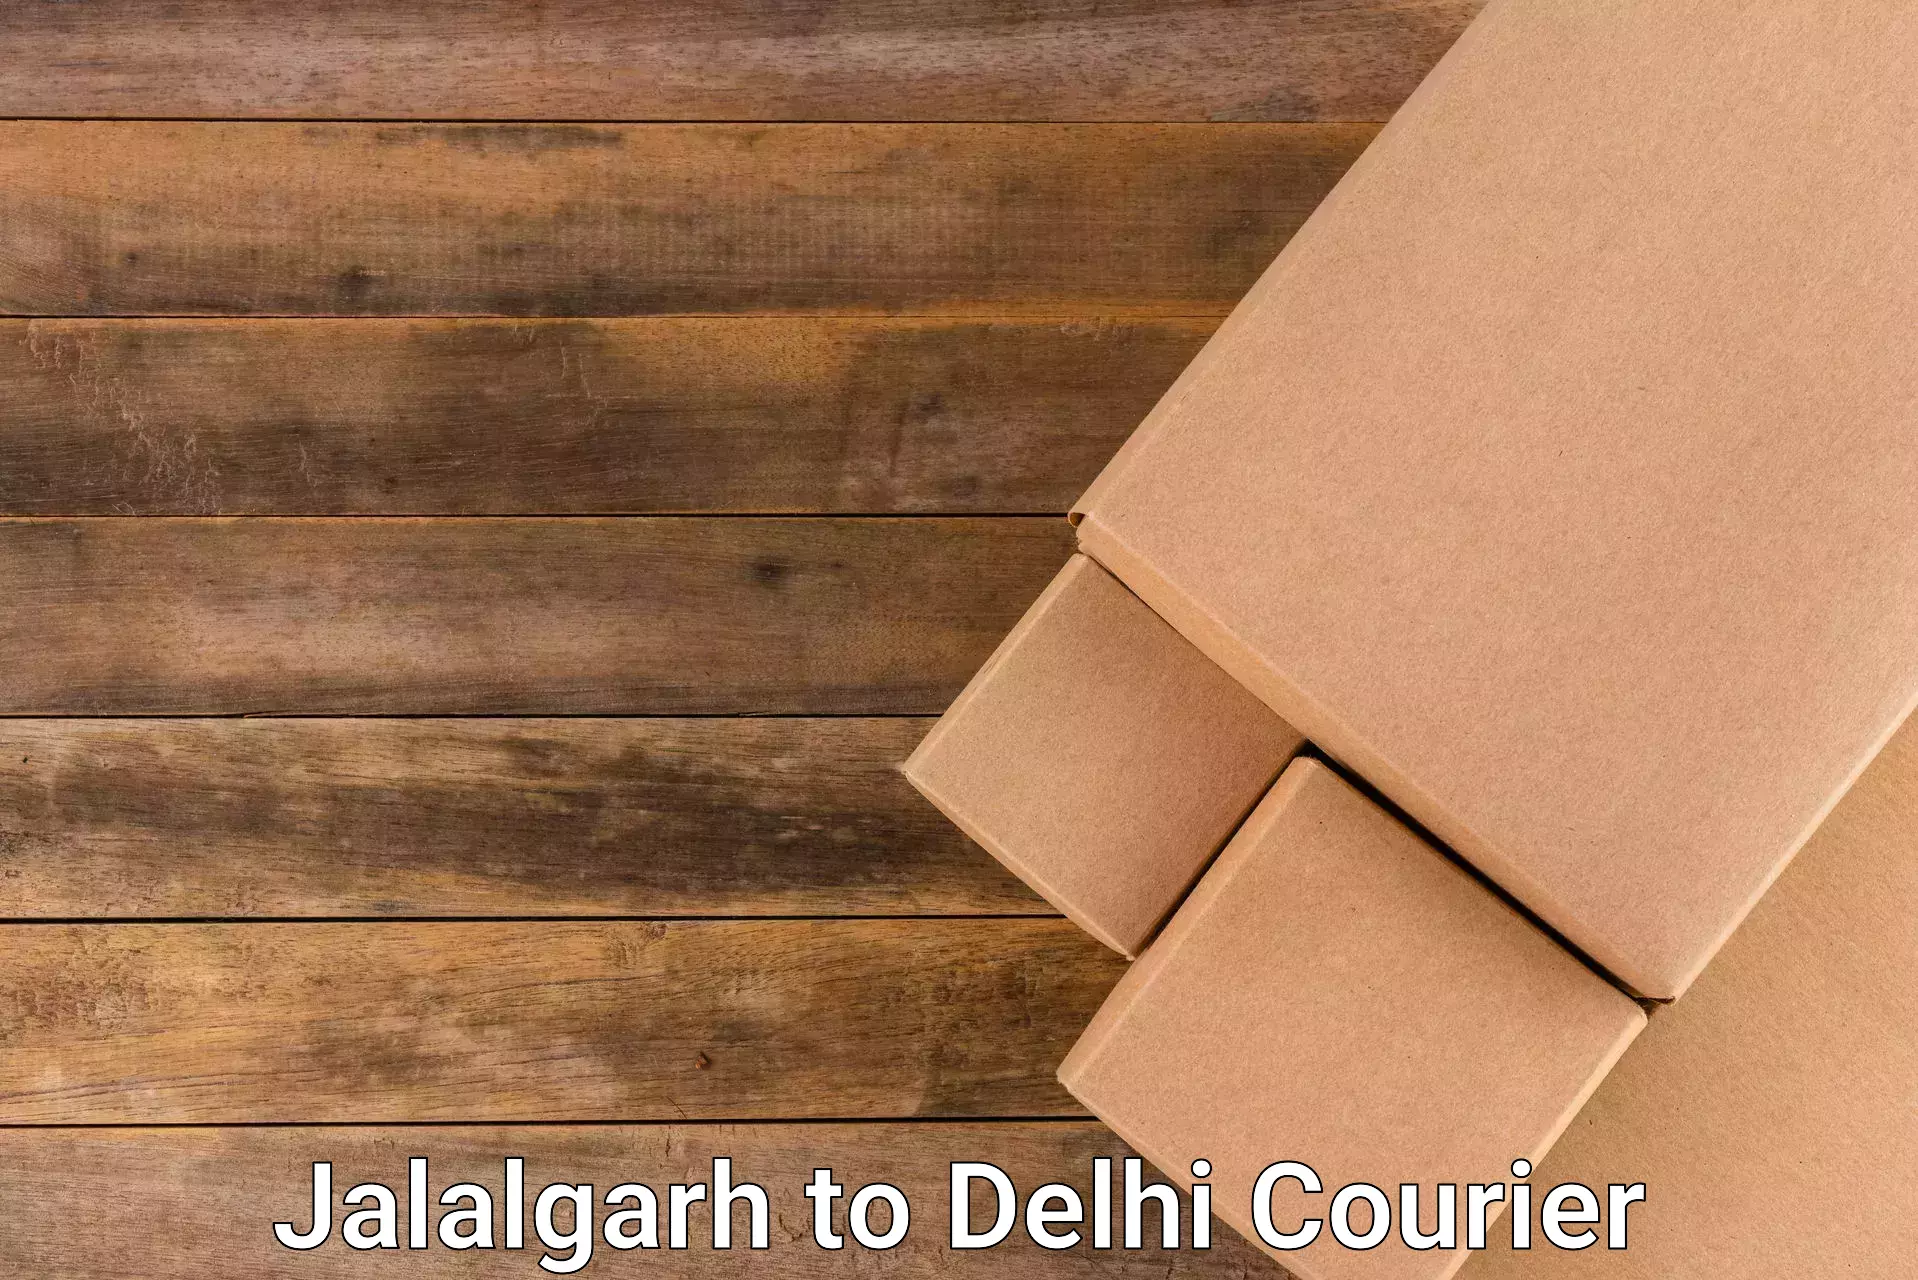 Courier service booking Jalalgarh to Delhi